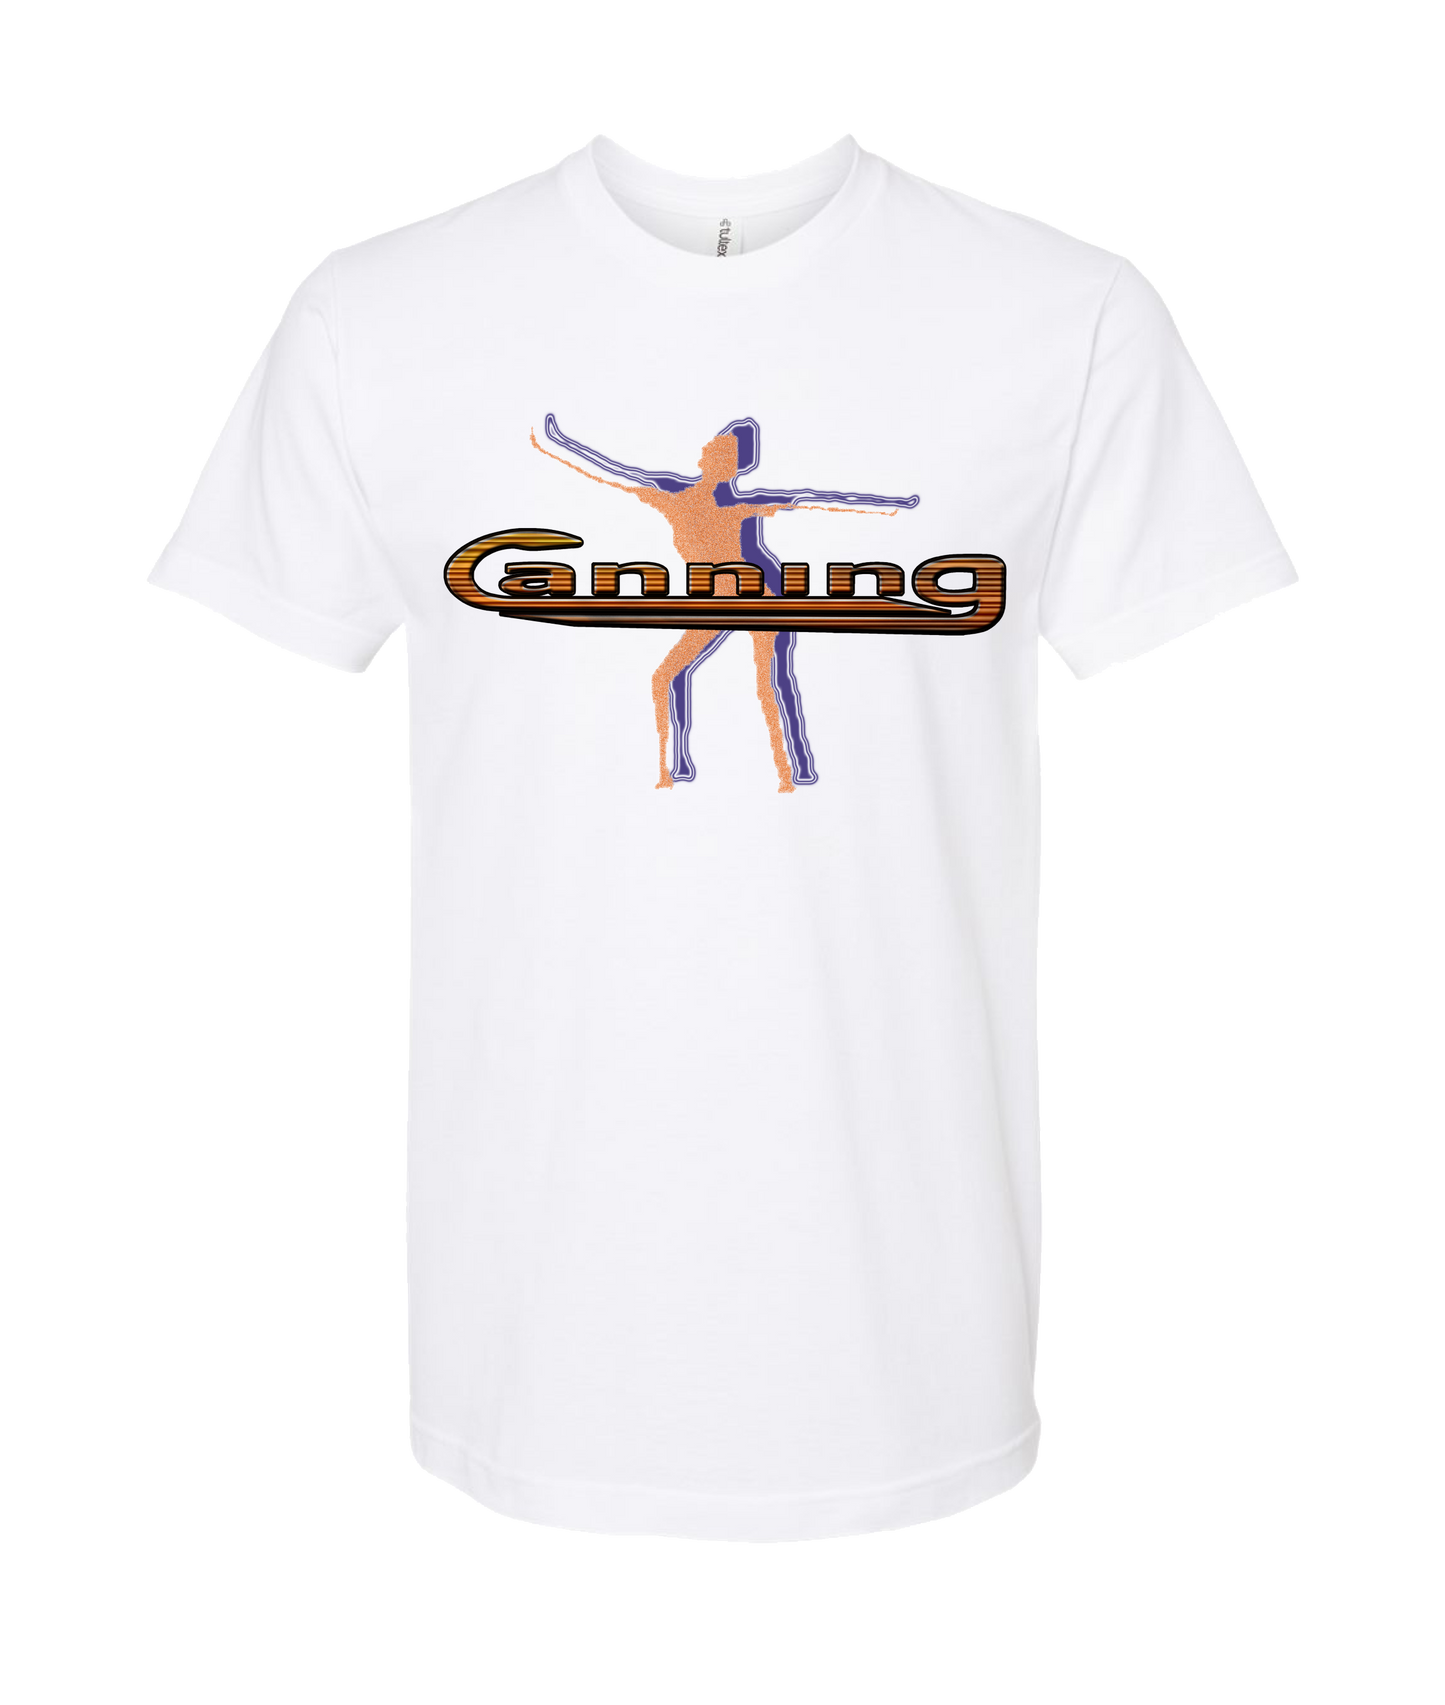 CanningMusic - DESIGN 3 - White T-Shirt